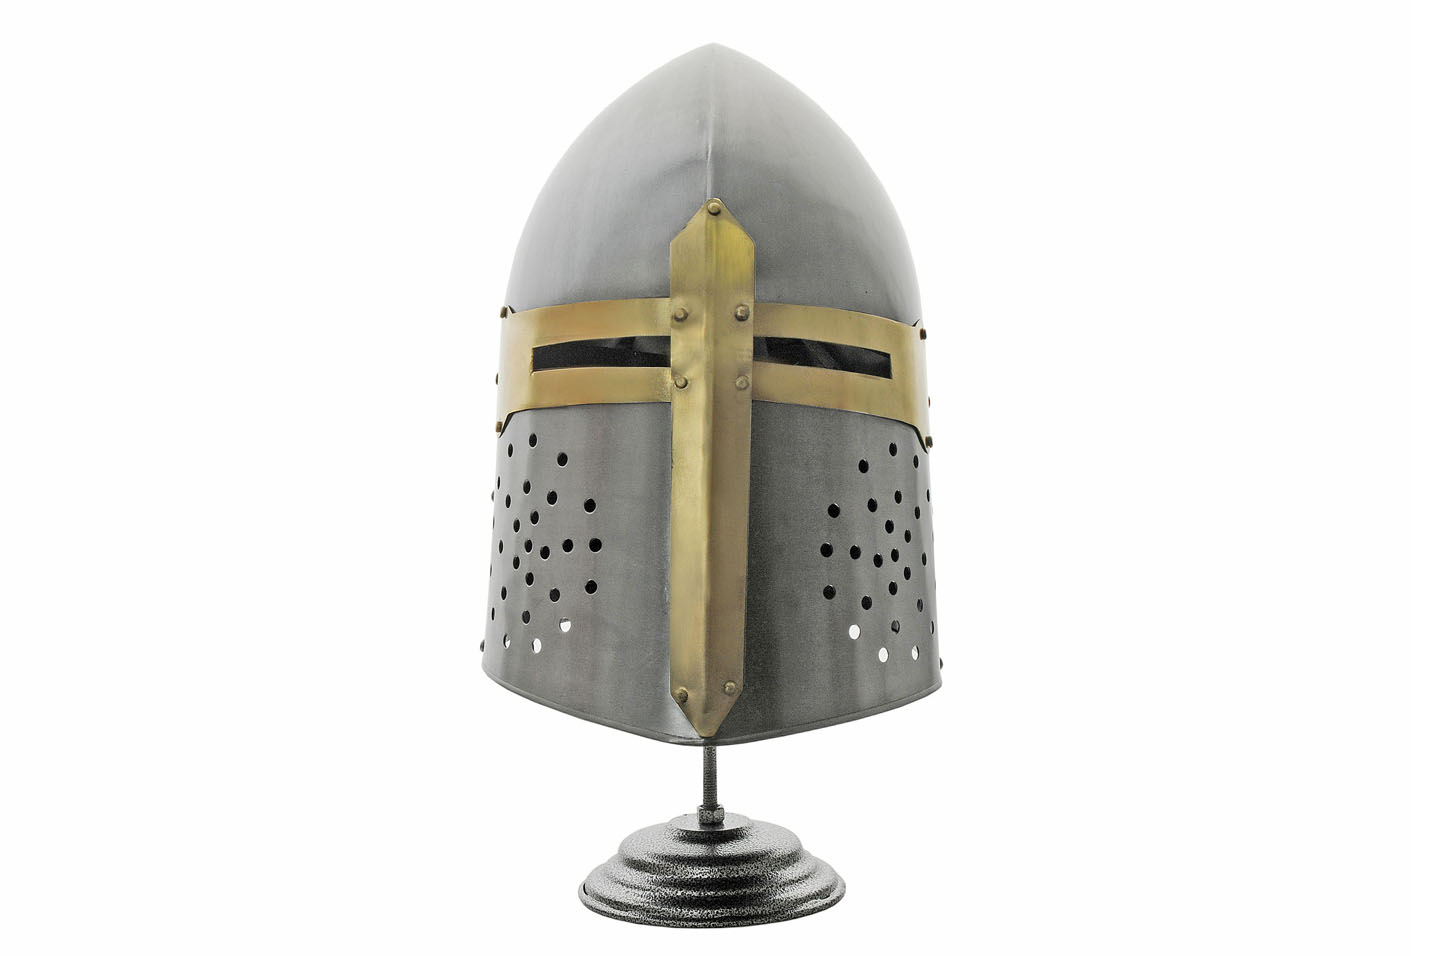 SUGARLOAF Armor Helmet Antique Finish Medieval Knight Crusader HELMET STAND+CAP 